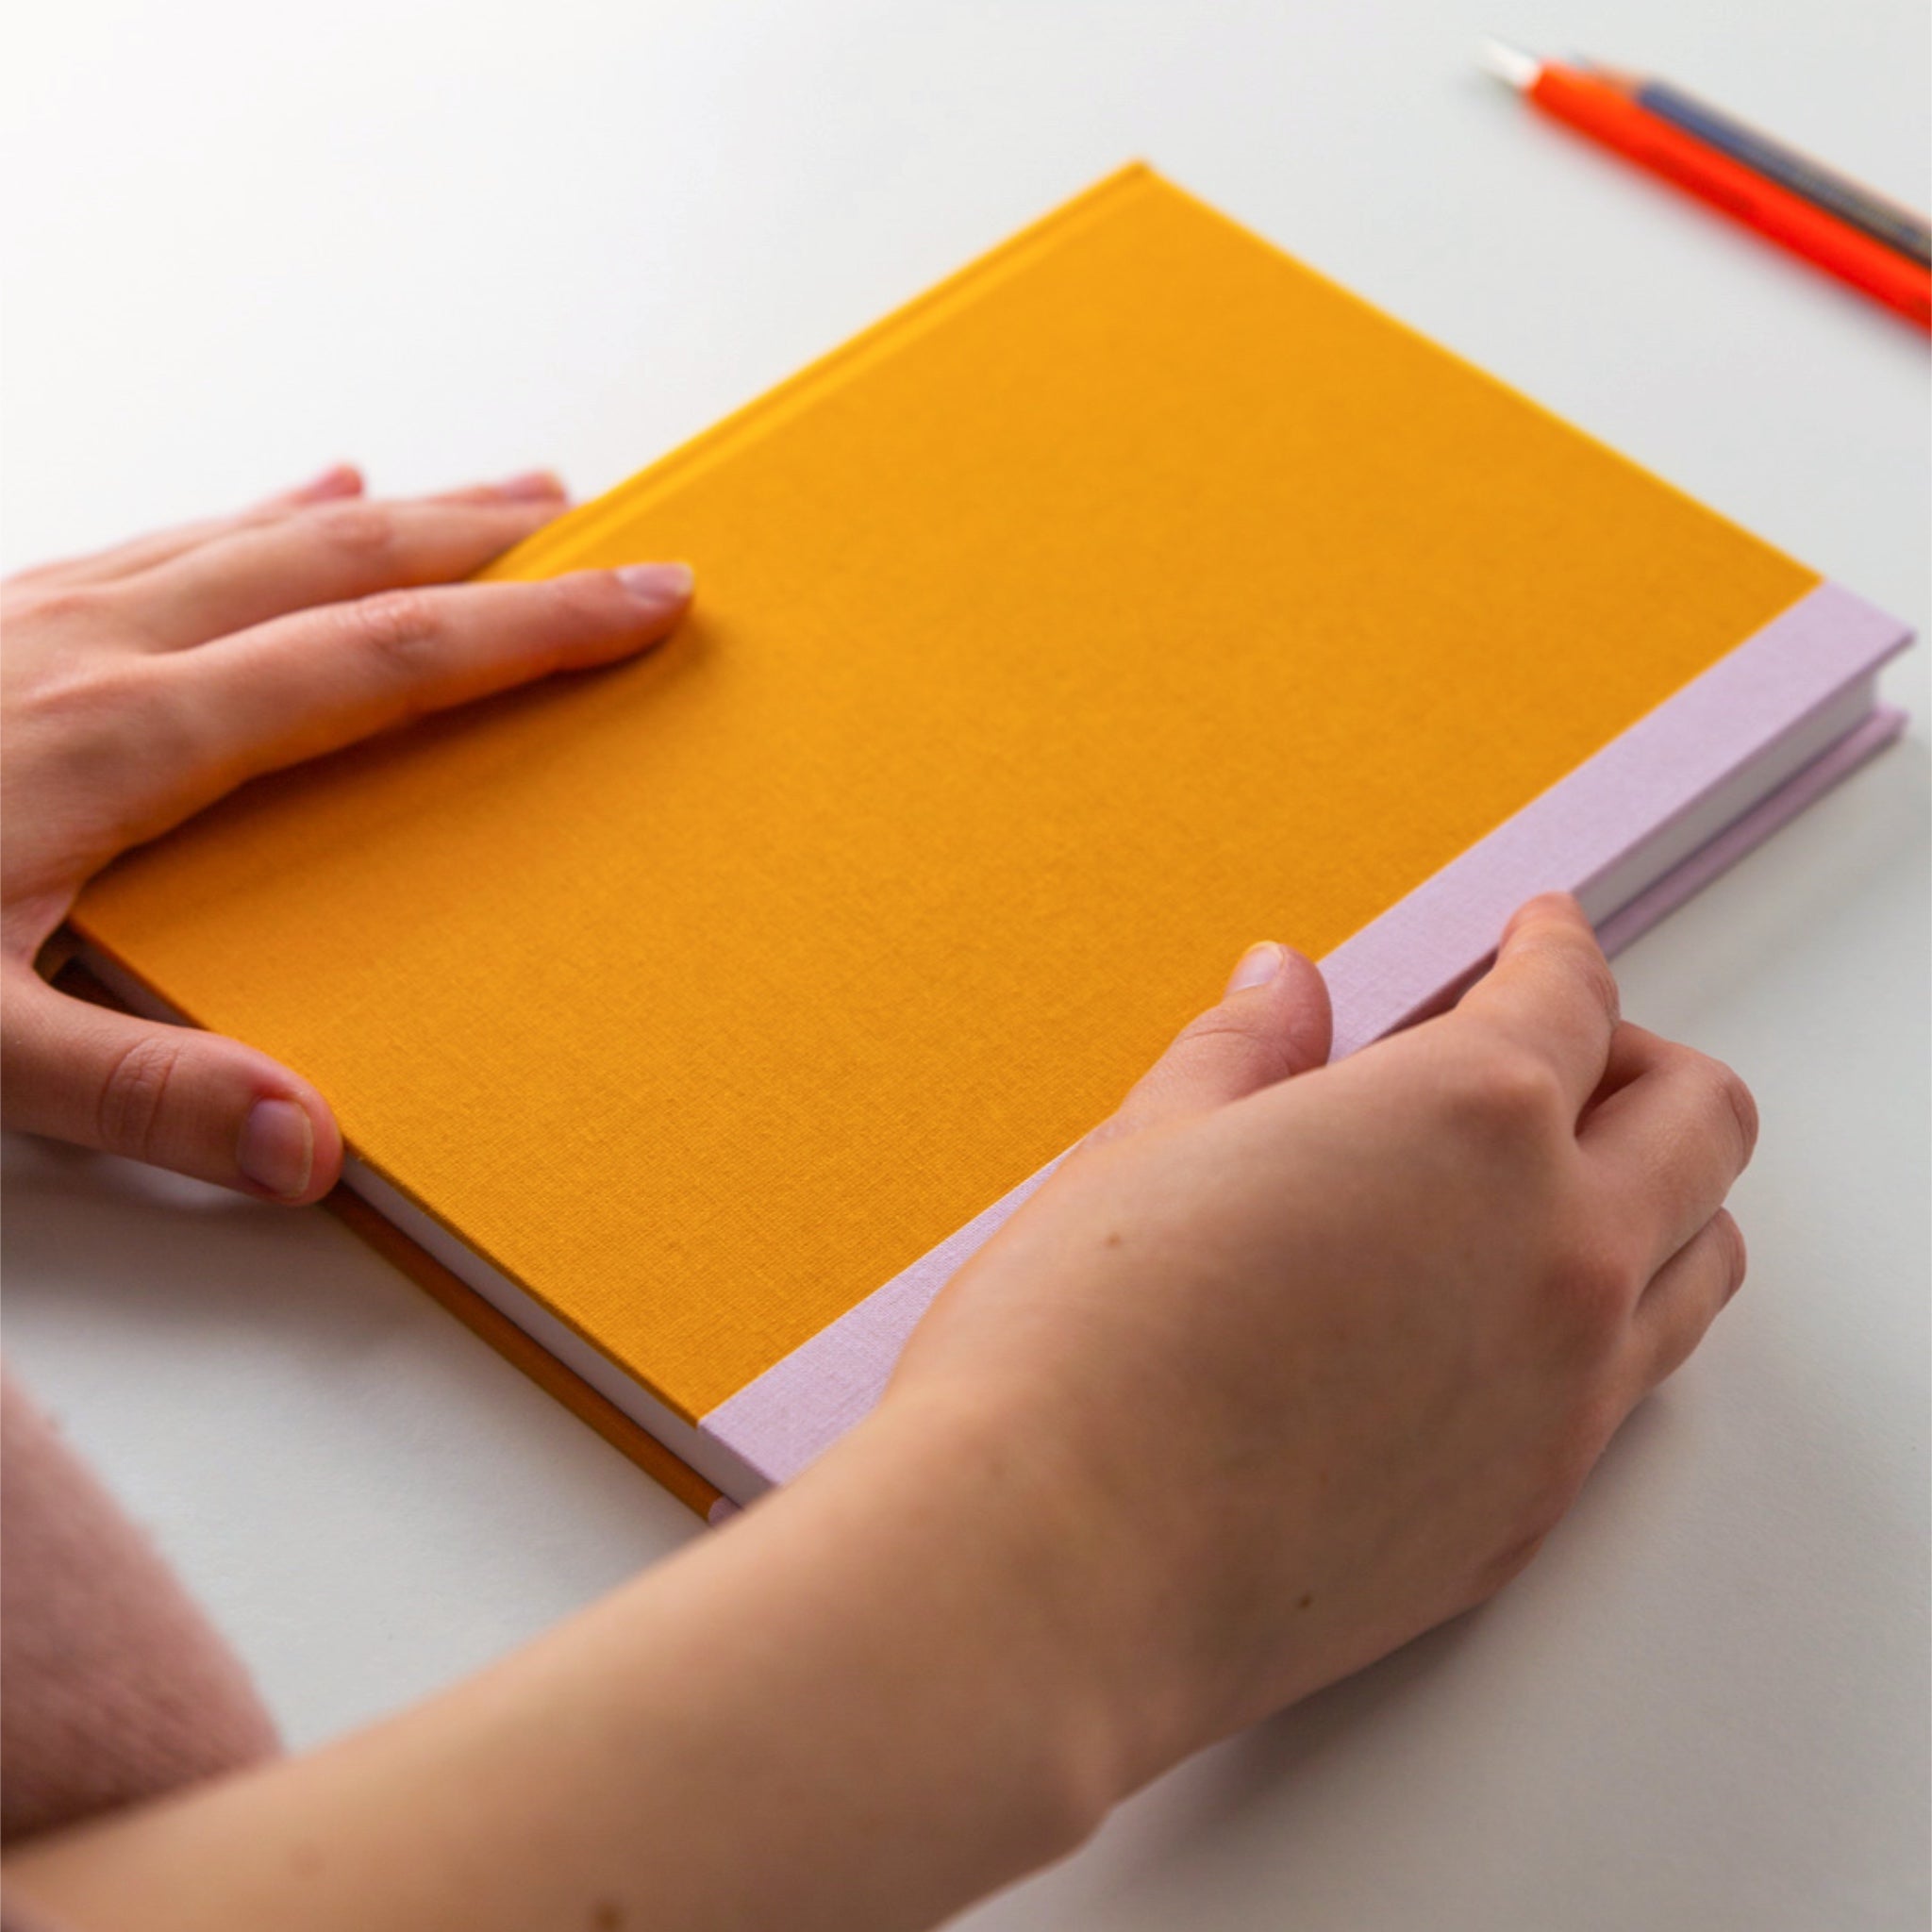 A5 Indian yellow clothbound hardback notebook